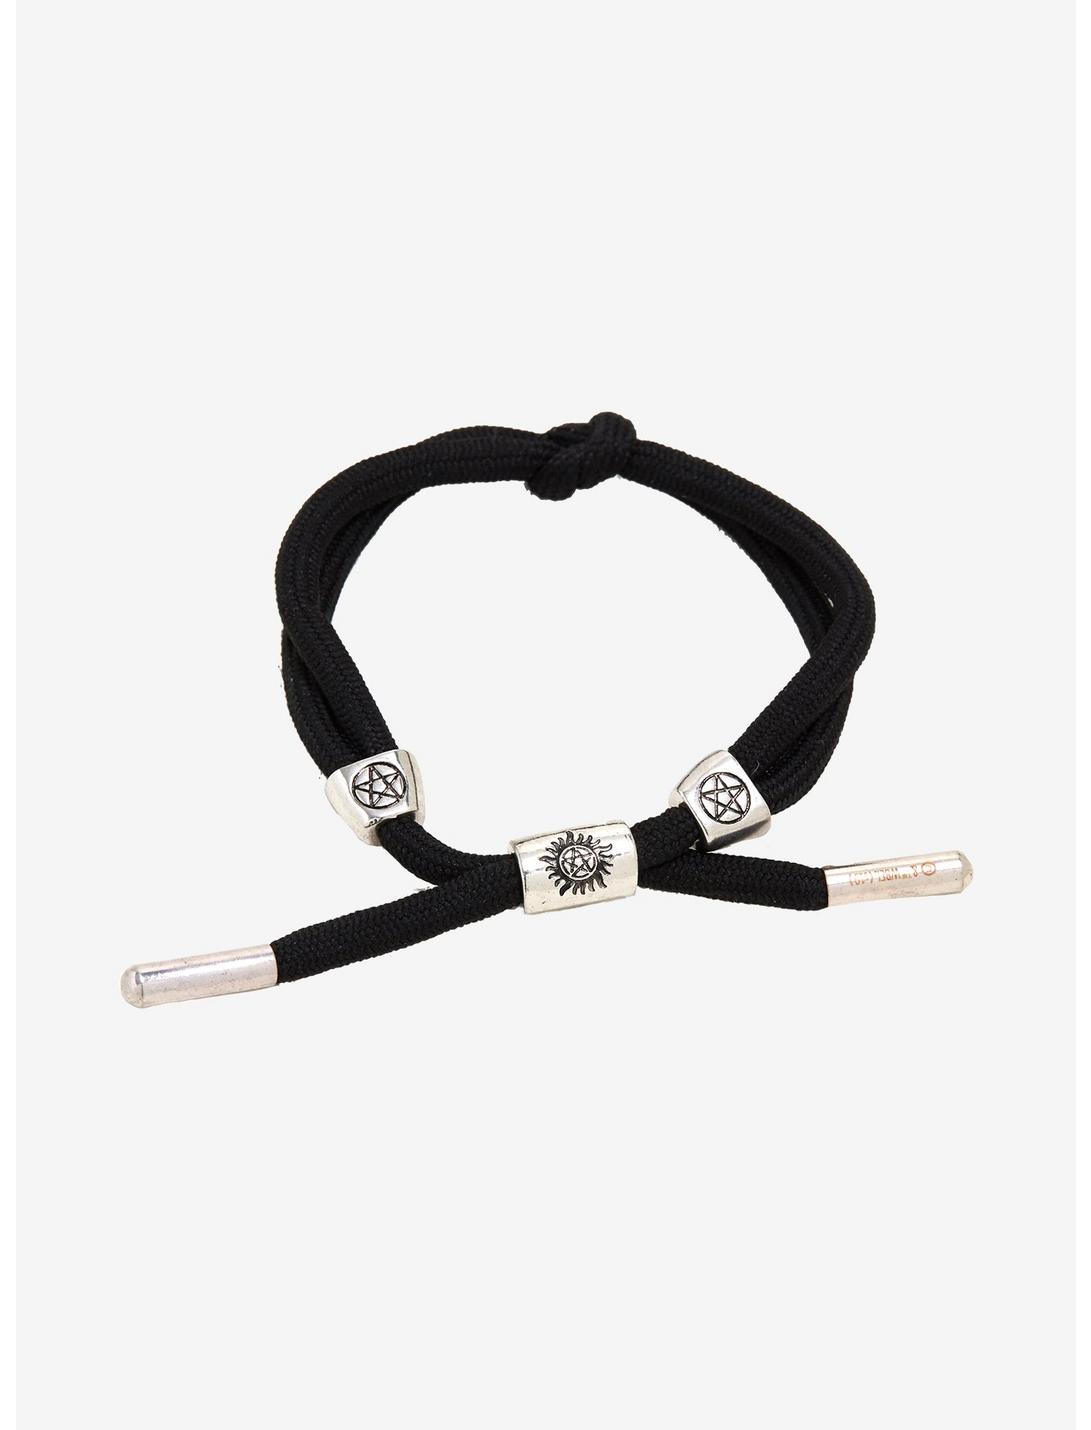 Supernatural Anti-Possession Cord Bracelet, , hi-res